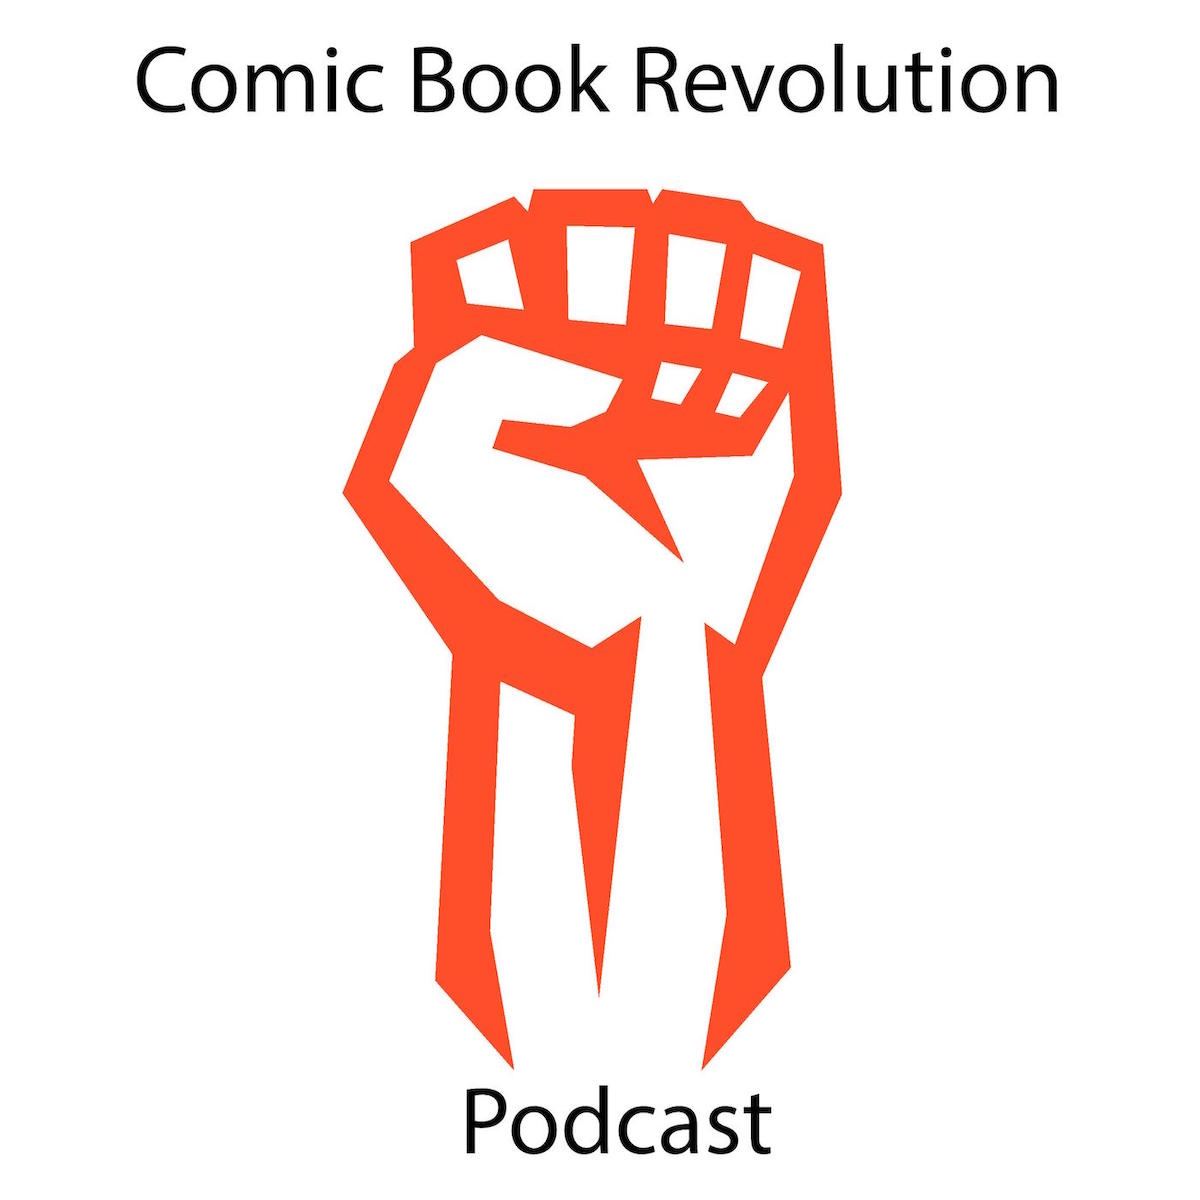 Comic Book Revolution Podcast Episode 66 - Disney's Star Wars Part 1